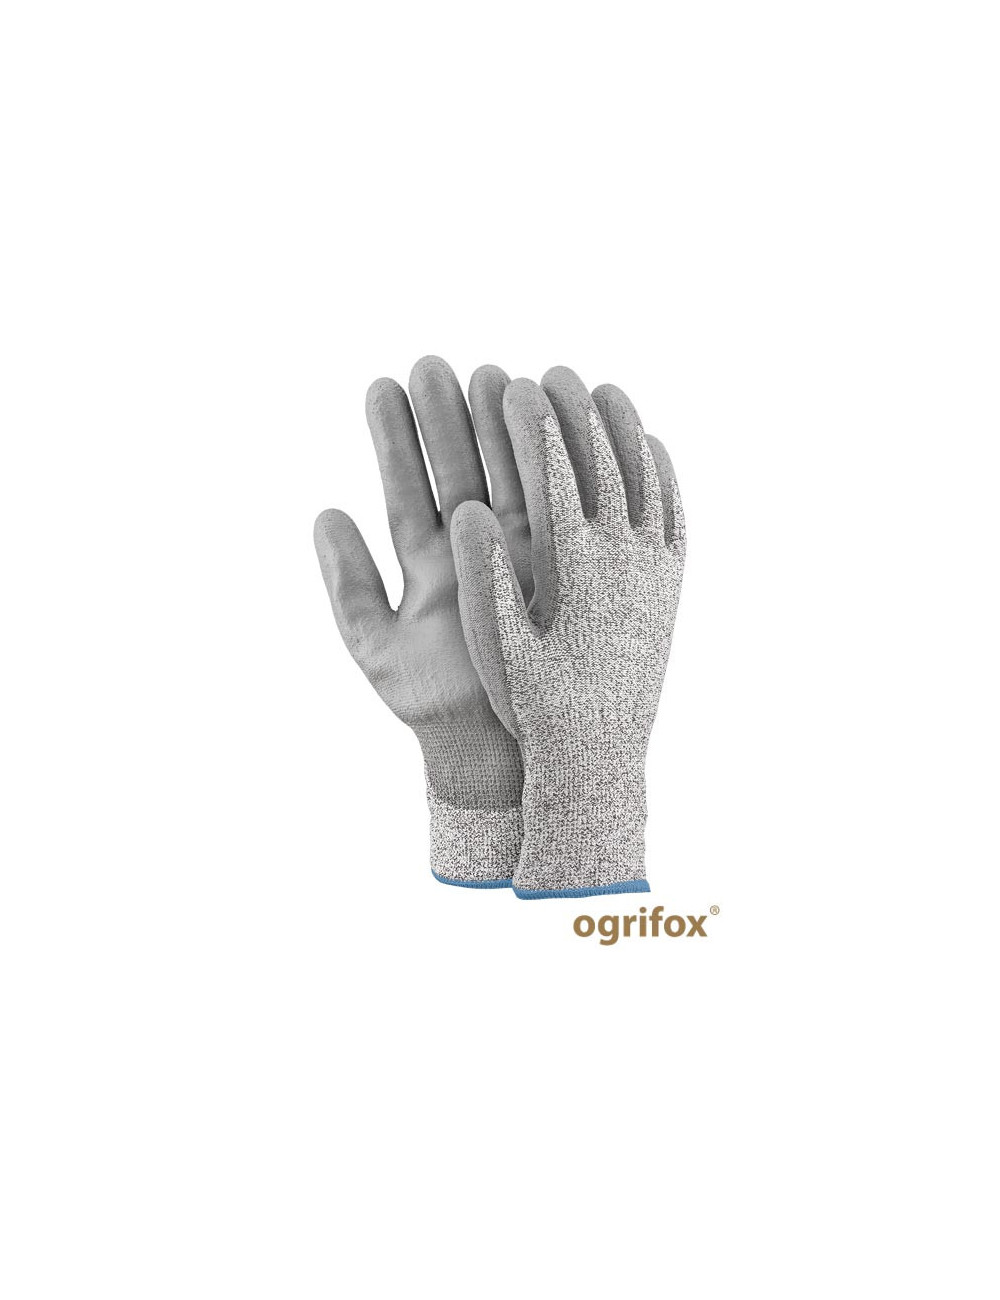 Gloves ox.12.844 steel-pu ox-steel-pu bws black-white-gray Ogrifox